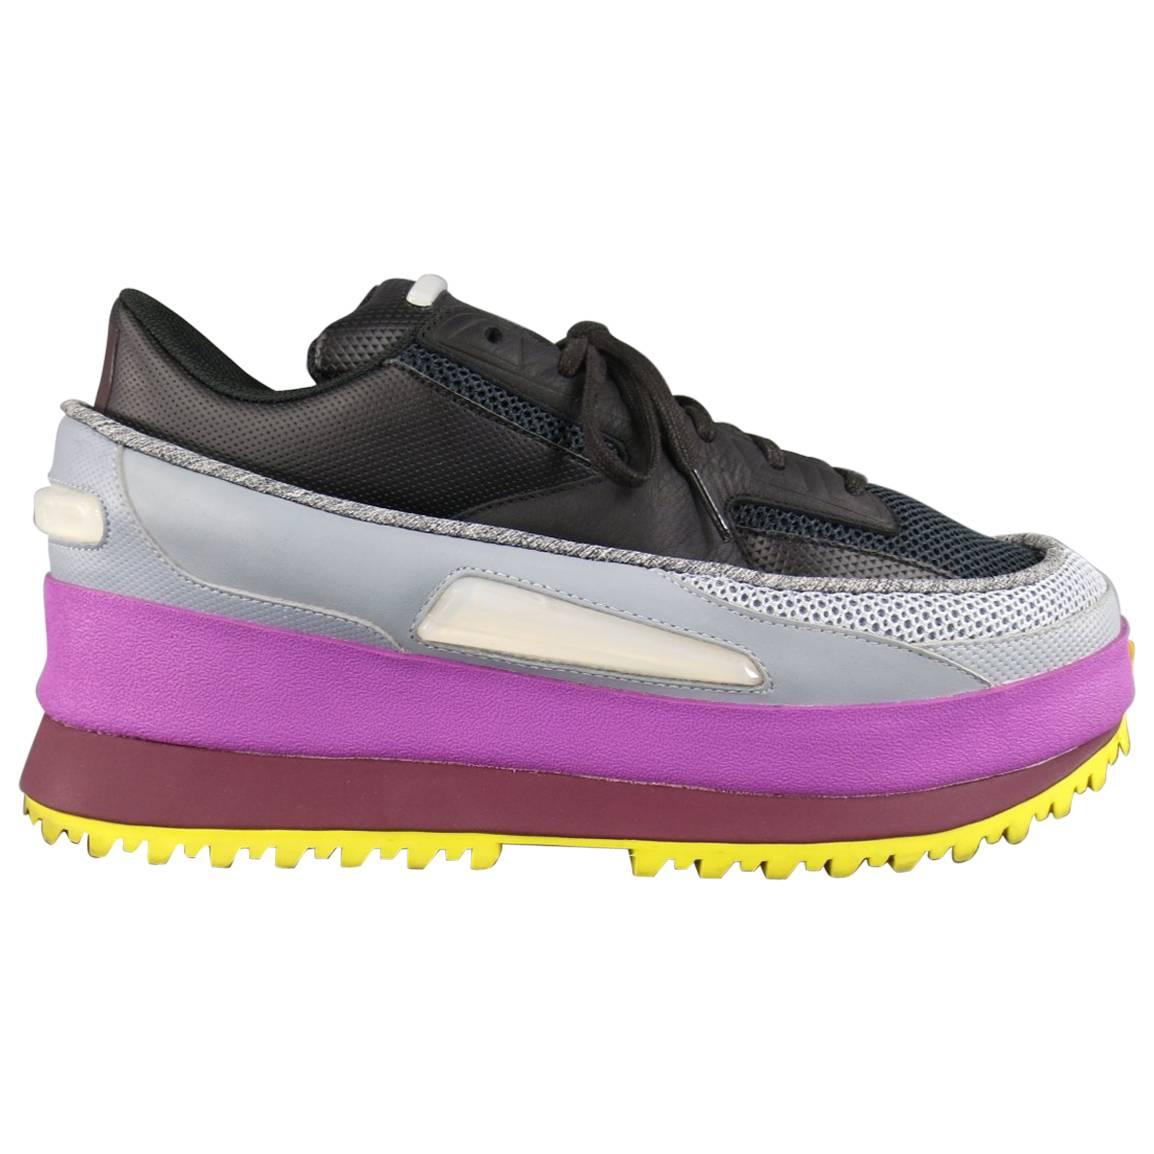 RAF SIMONS X ADIDAS Size 11 Black Gray Purple & Yellow Platform Sneakers